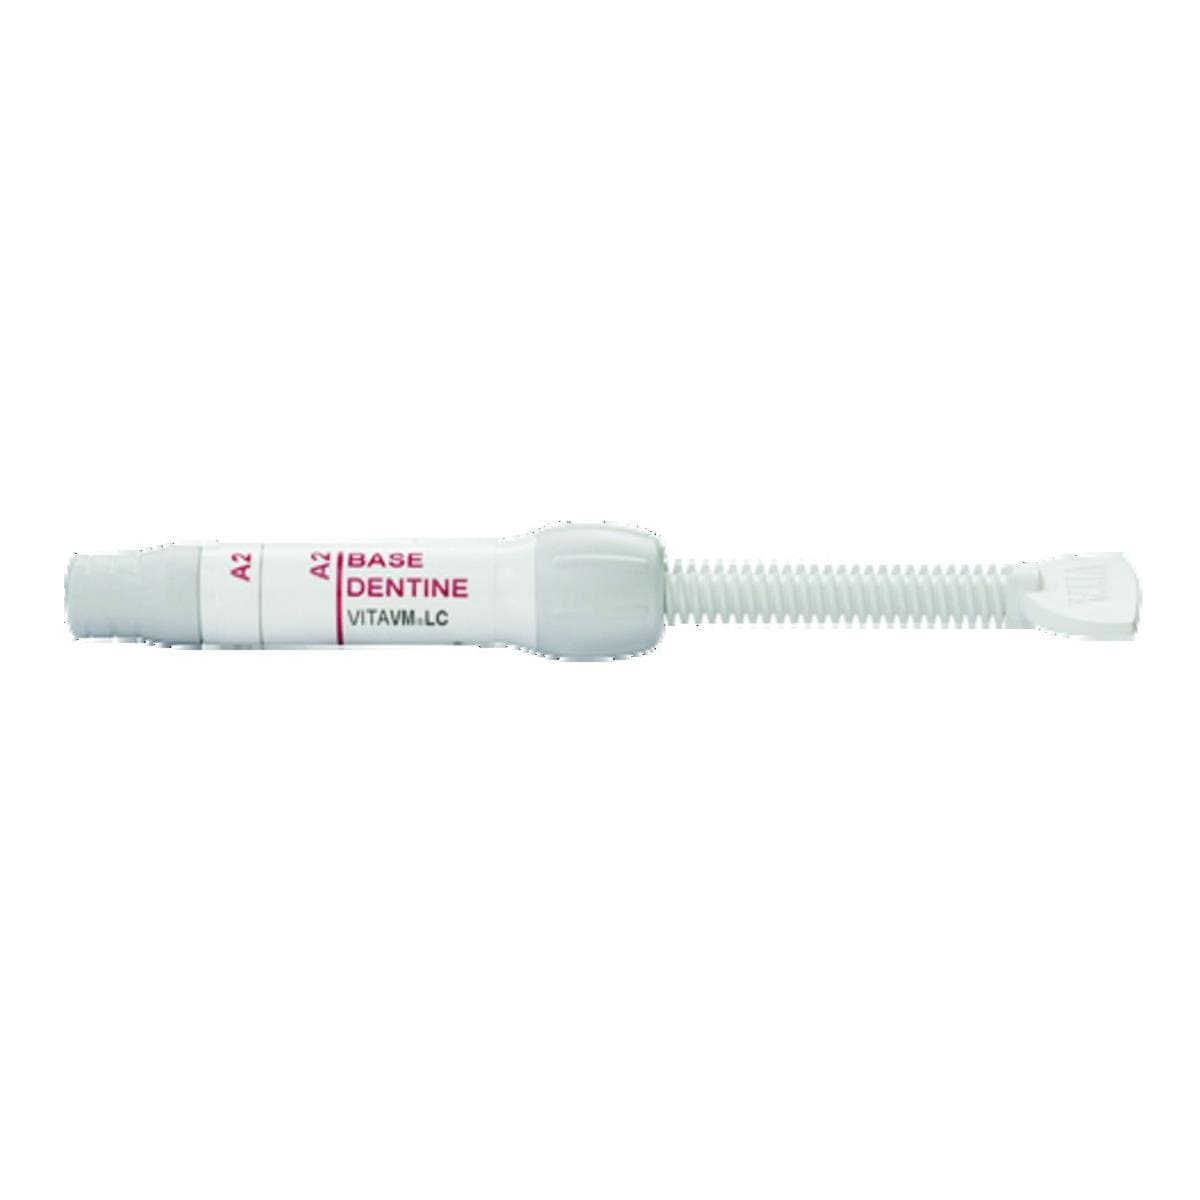 VM LC VITA - 3-D Master - Base Dentine 2M1 - La seringue de 4 g